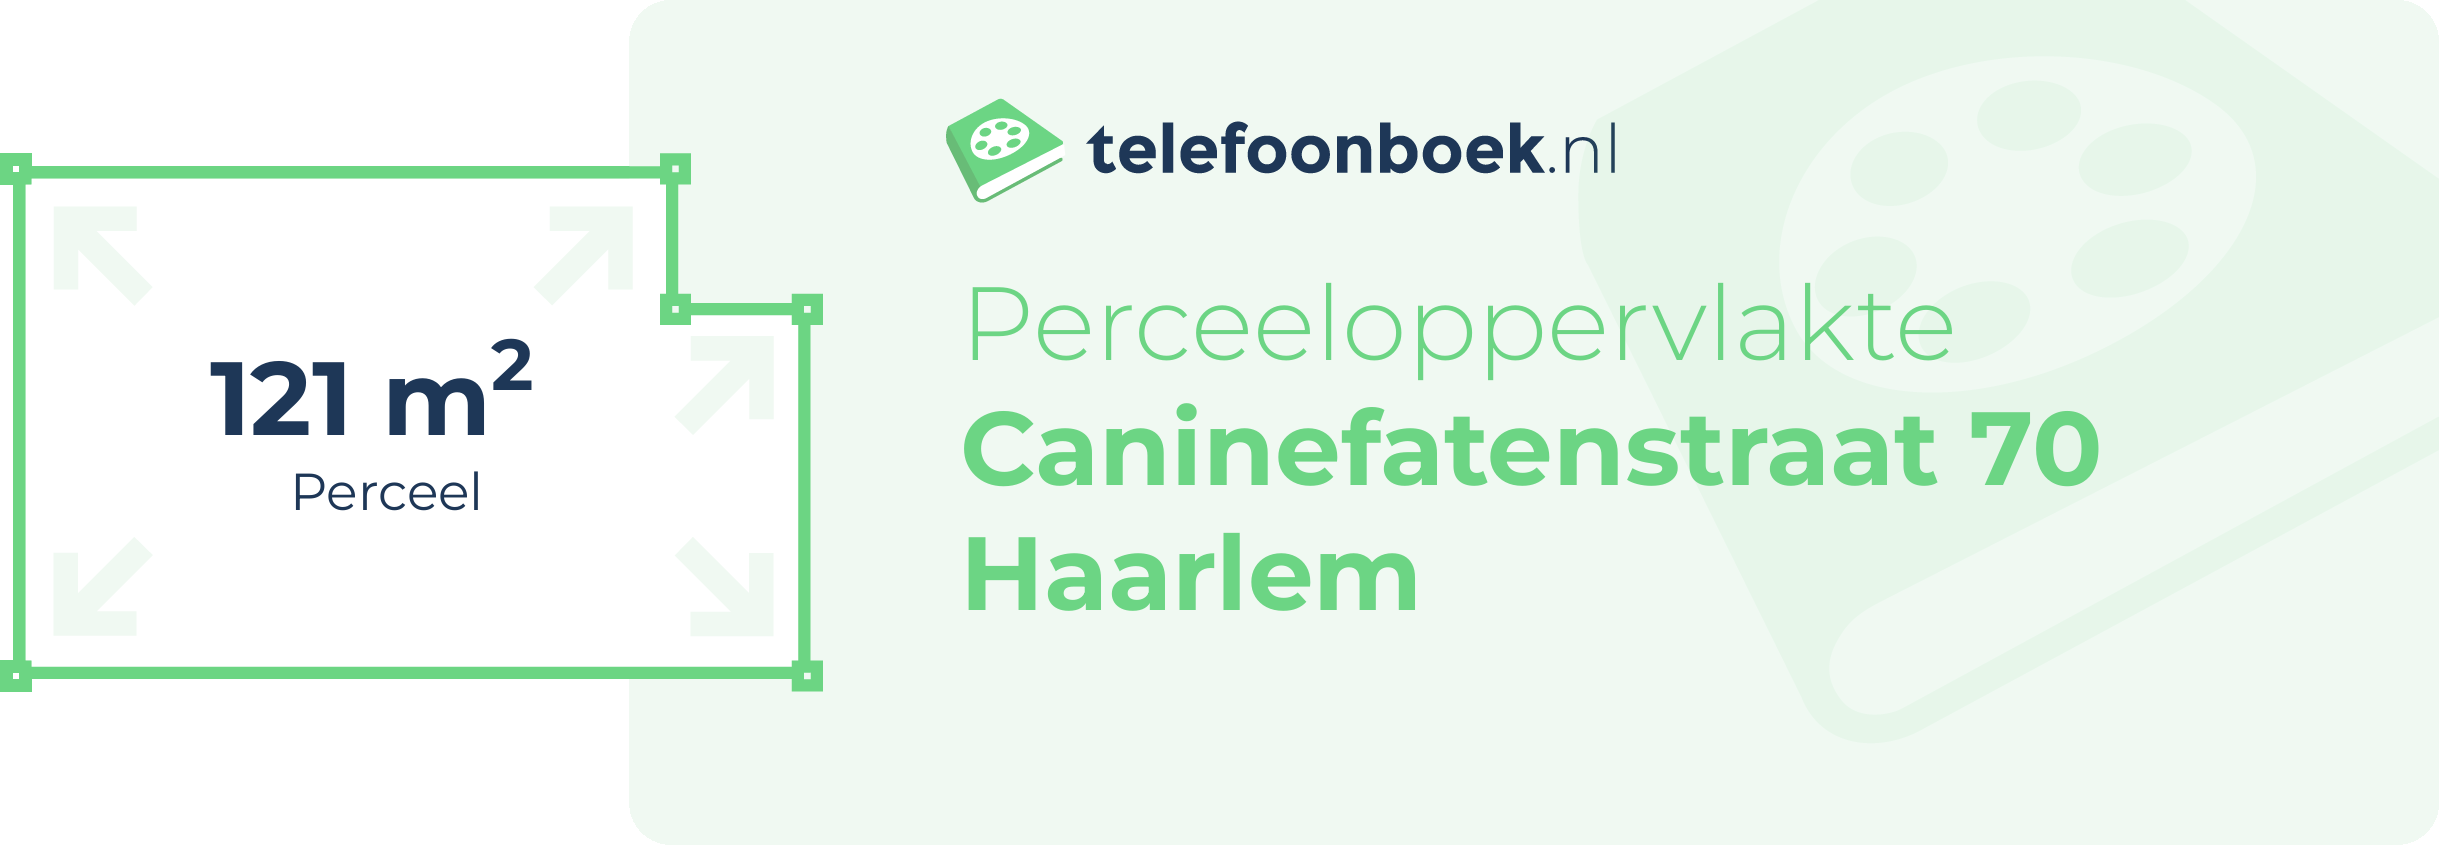 Perceeloppervlakte Caninefatenstraat 70 Haarlem